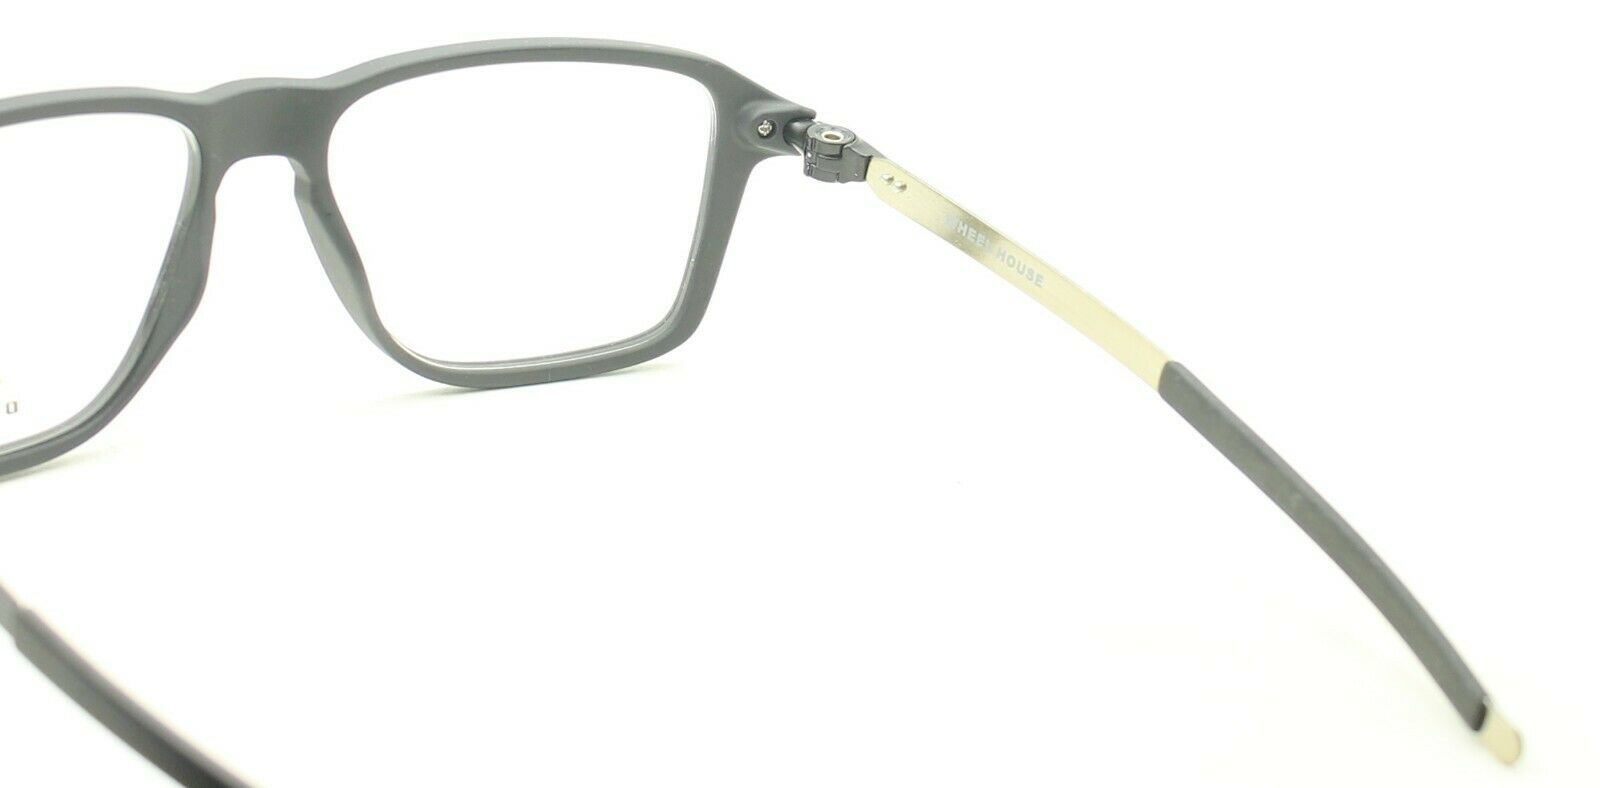 OAKLEY WHEEL HOUSE OX8166-0154 54mm Eyewear FRAMES RX Optical Eyeglasses Glasses